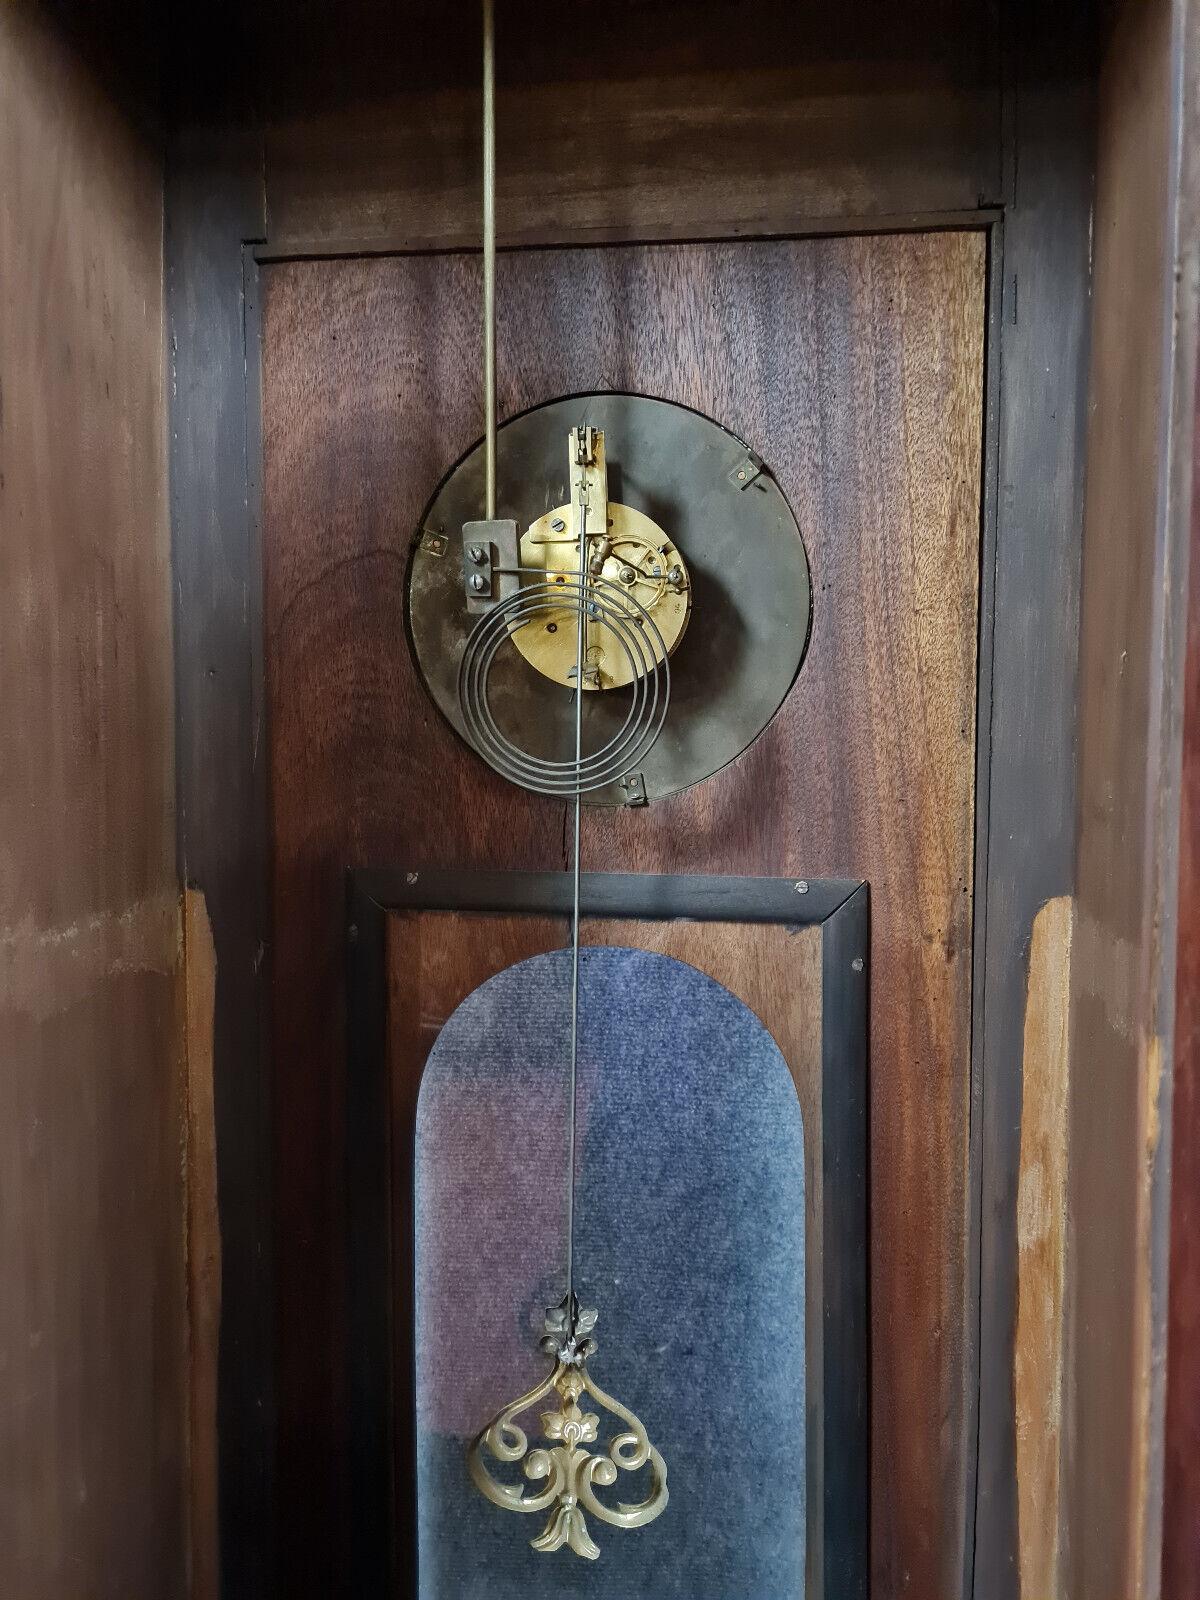 Grand Parquet Regulator Clock in Empire Style Mahogany -1X55 For Sale 5